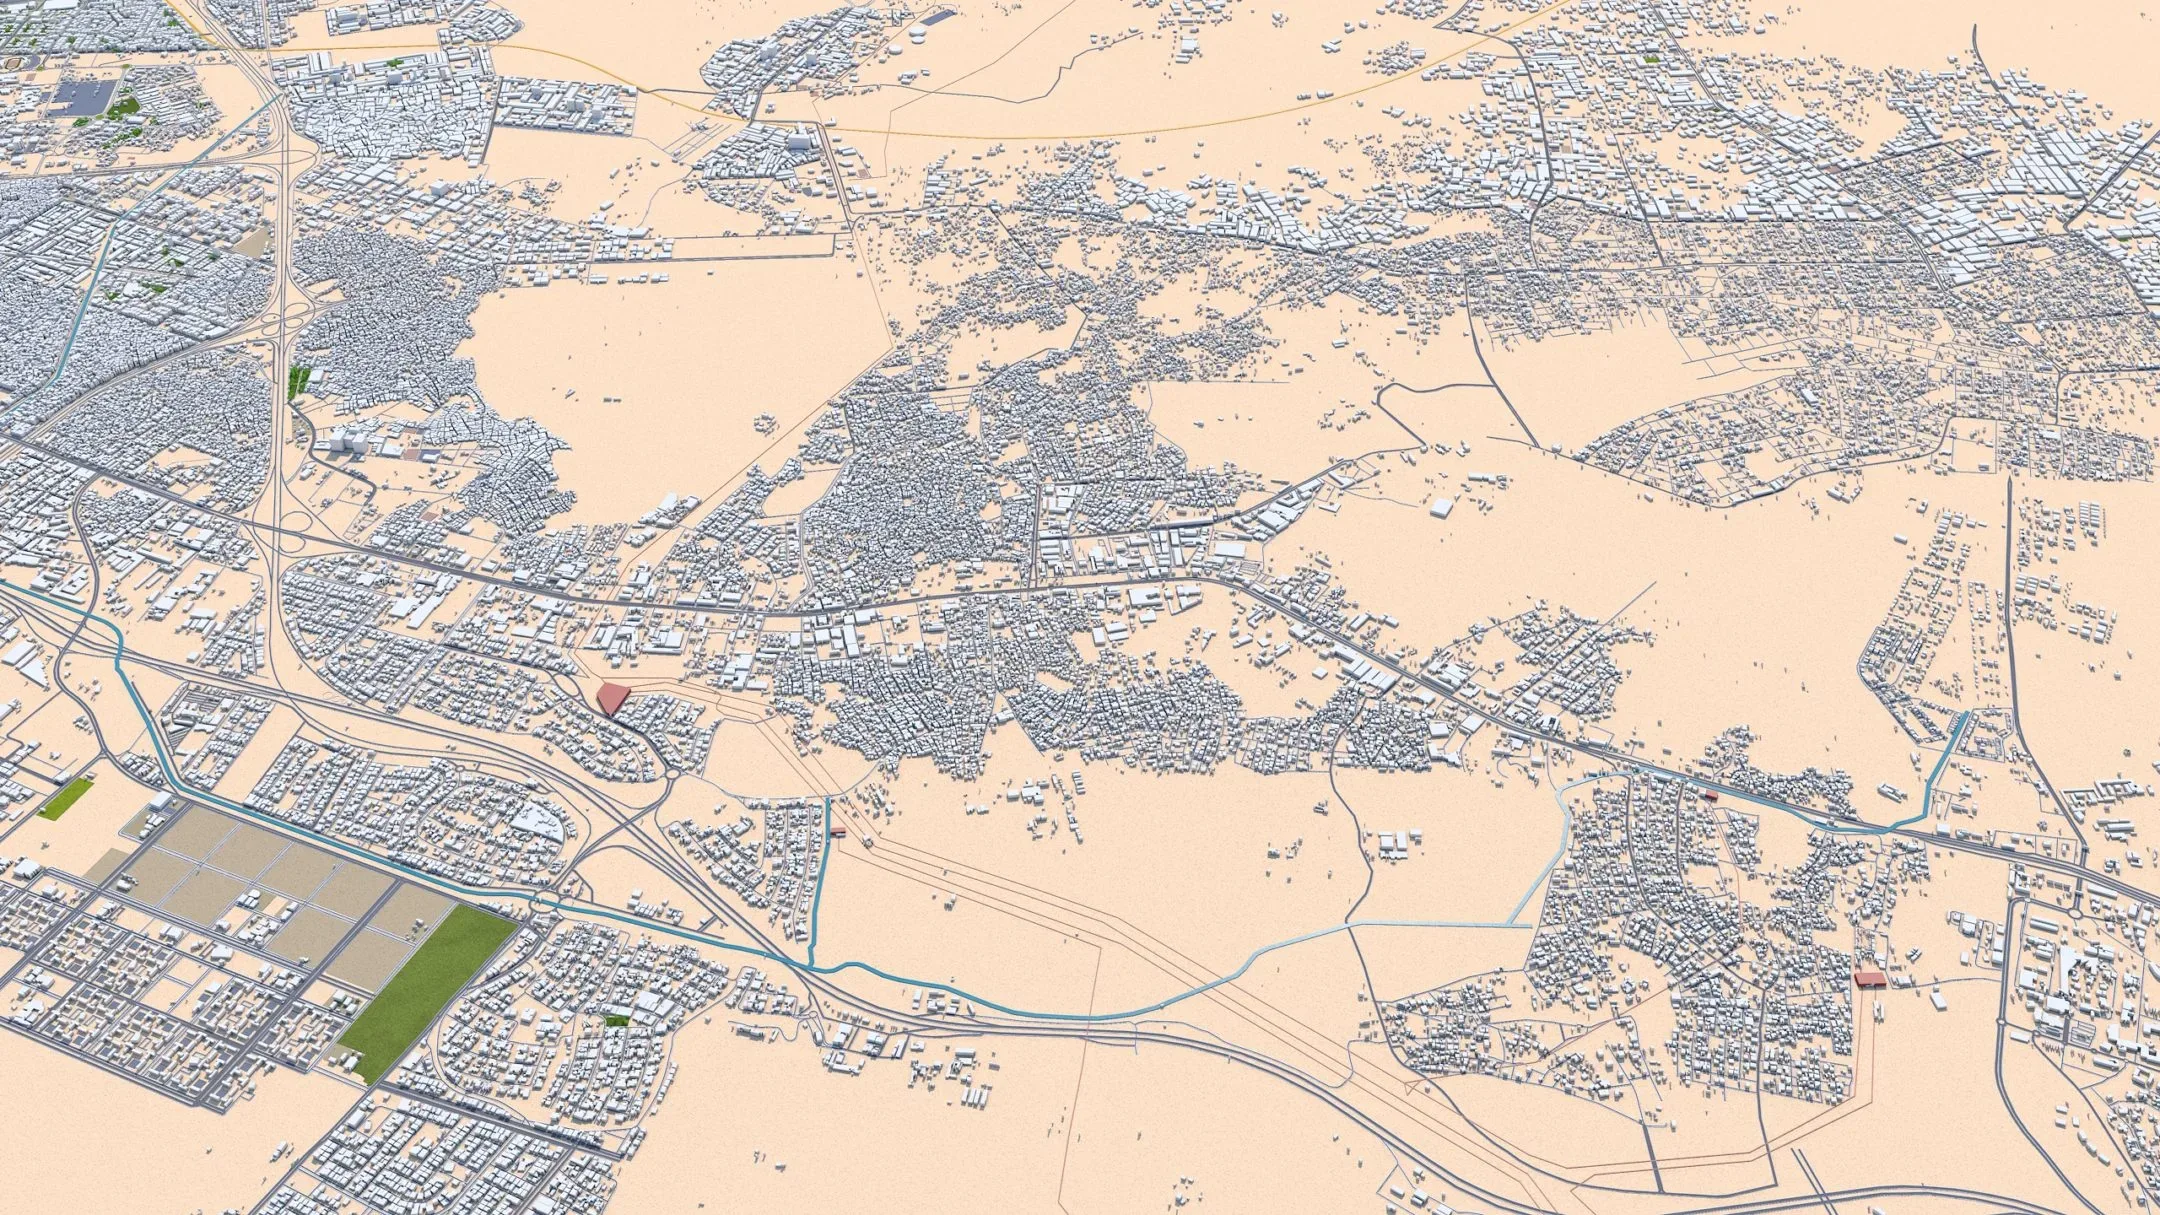 Jeddah City Saudi Arabia 3D Model 120KM